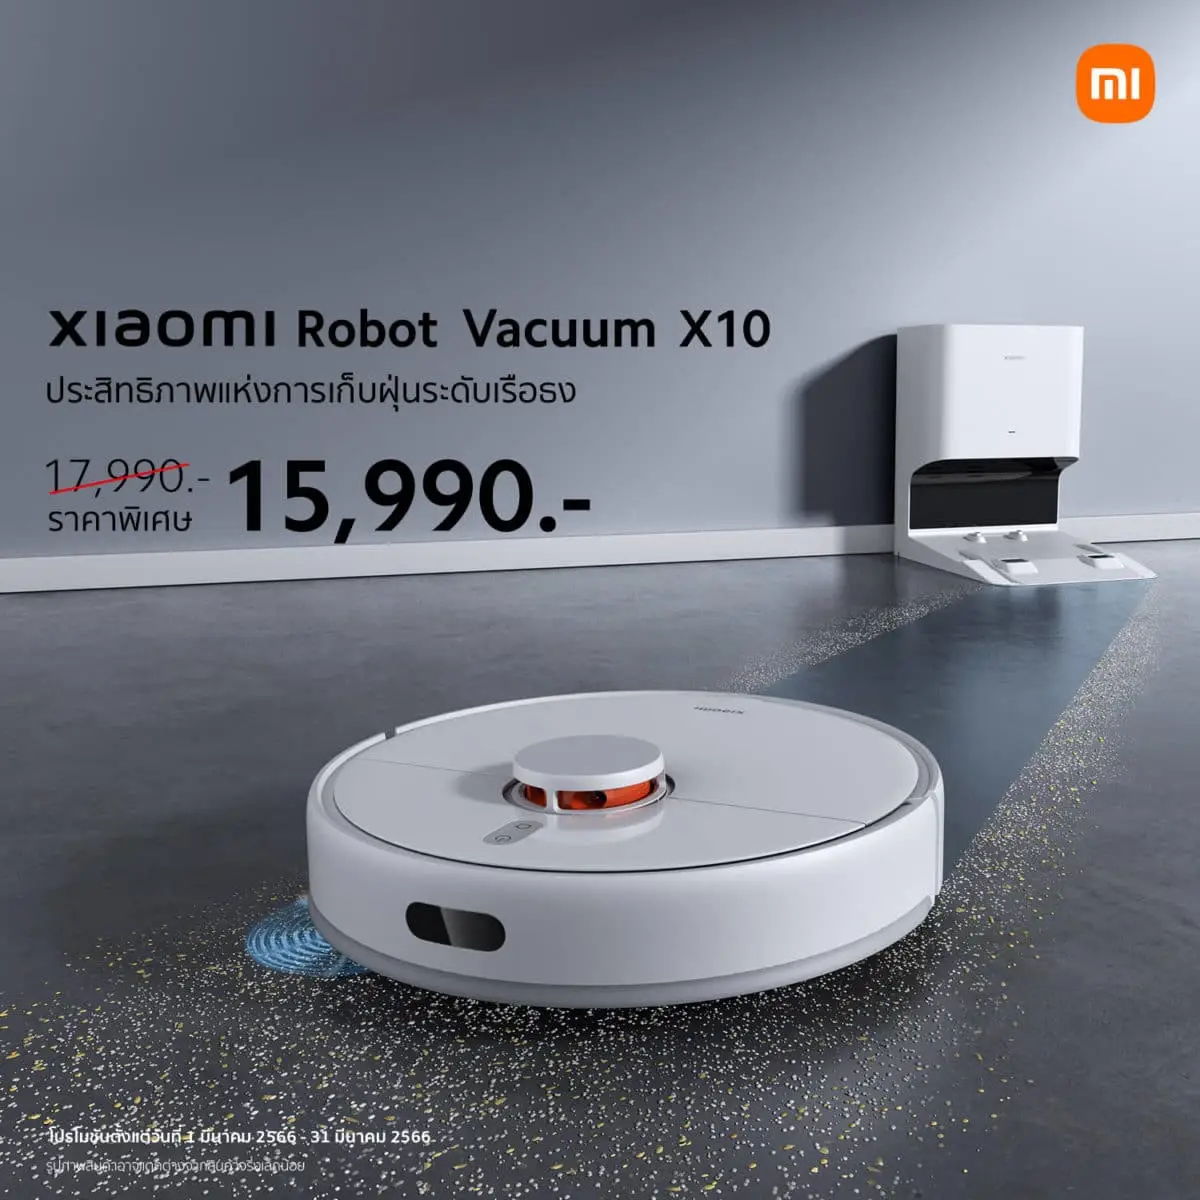 Xiaomi Robot Vacuum X10 